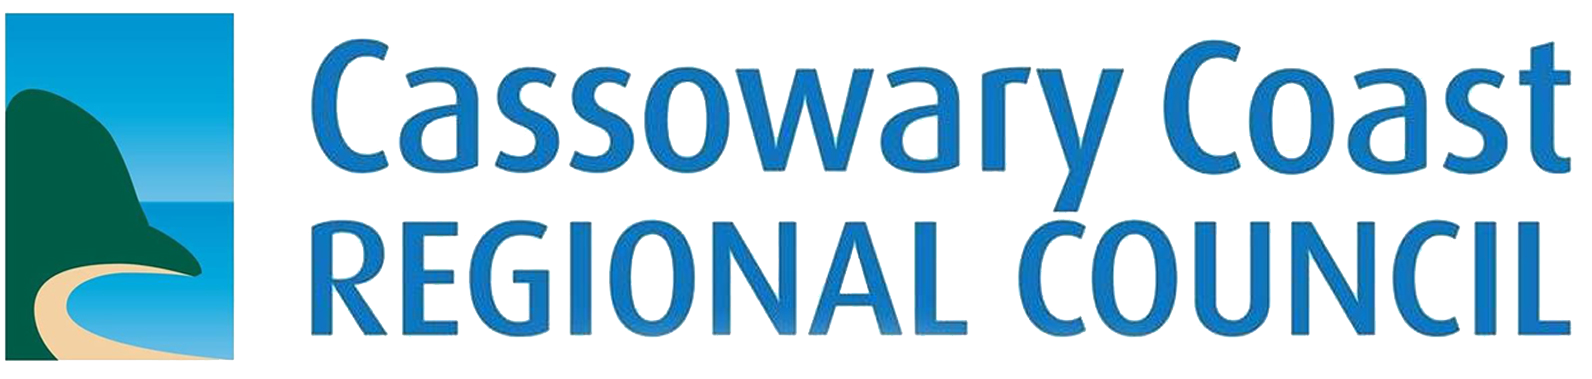 Cassowary Coast Regional Council logo